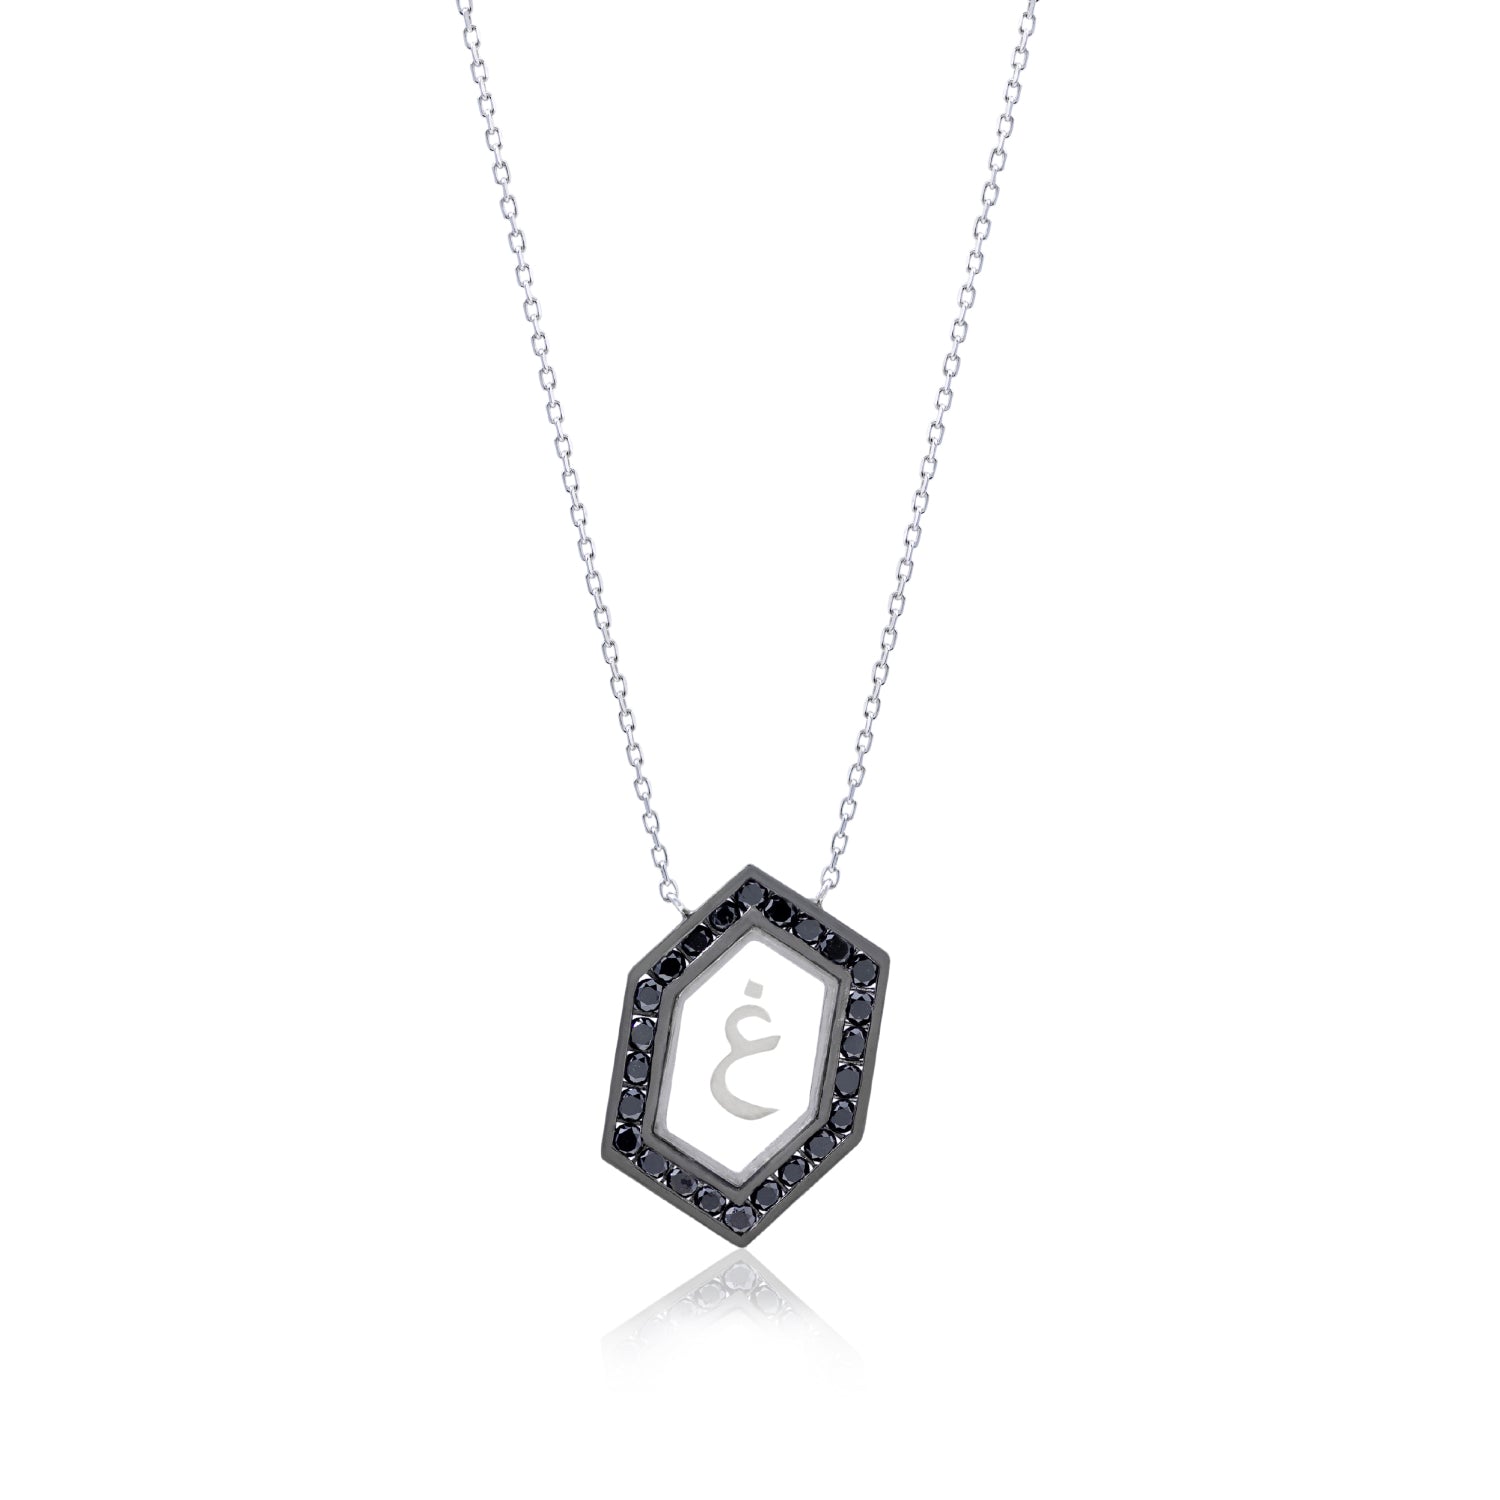 Qamoos 1.0 Letter غ Black Diamond Necklace in Black Rhodium-Plated White Gold